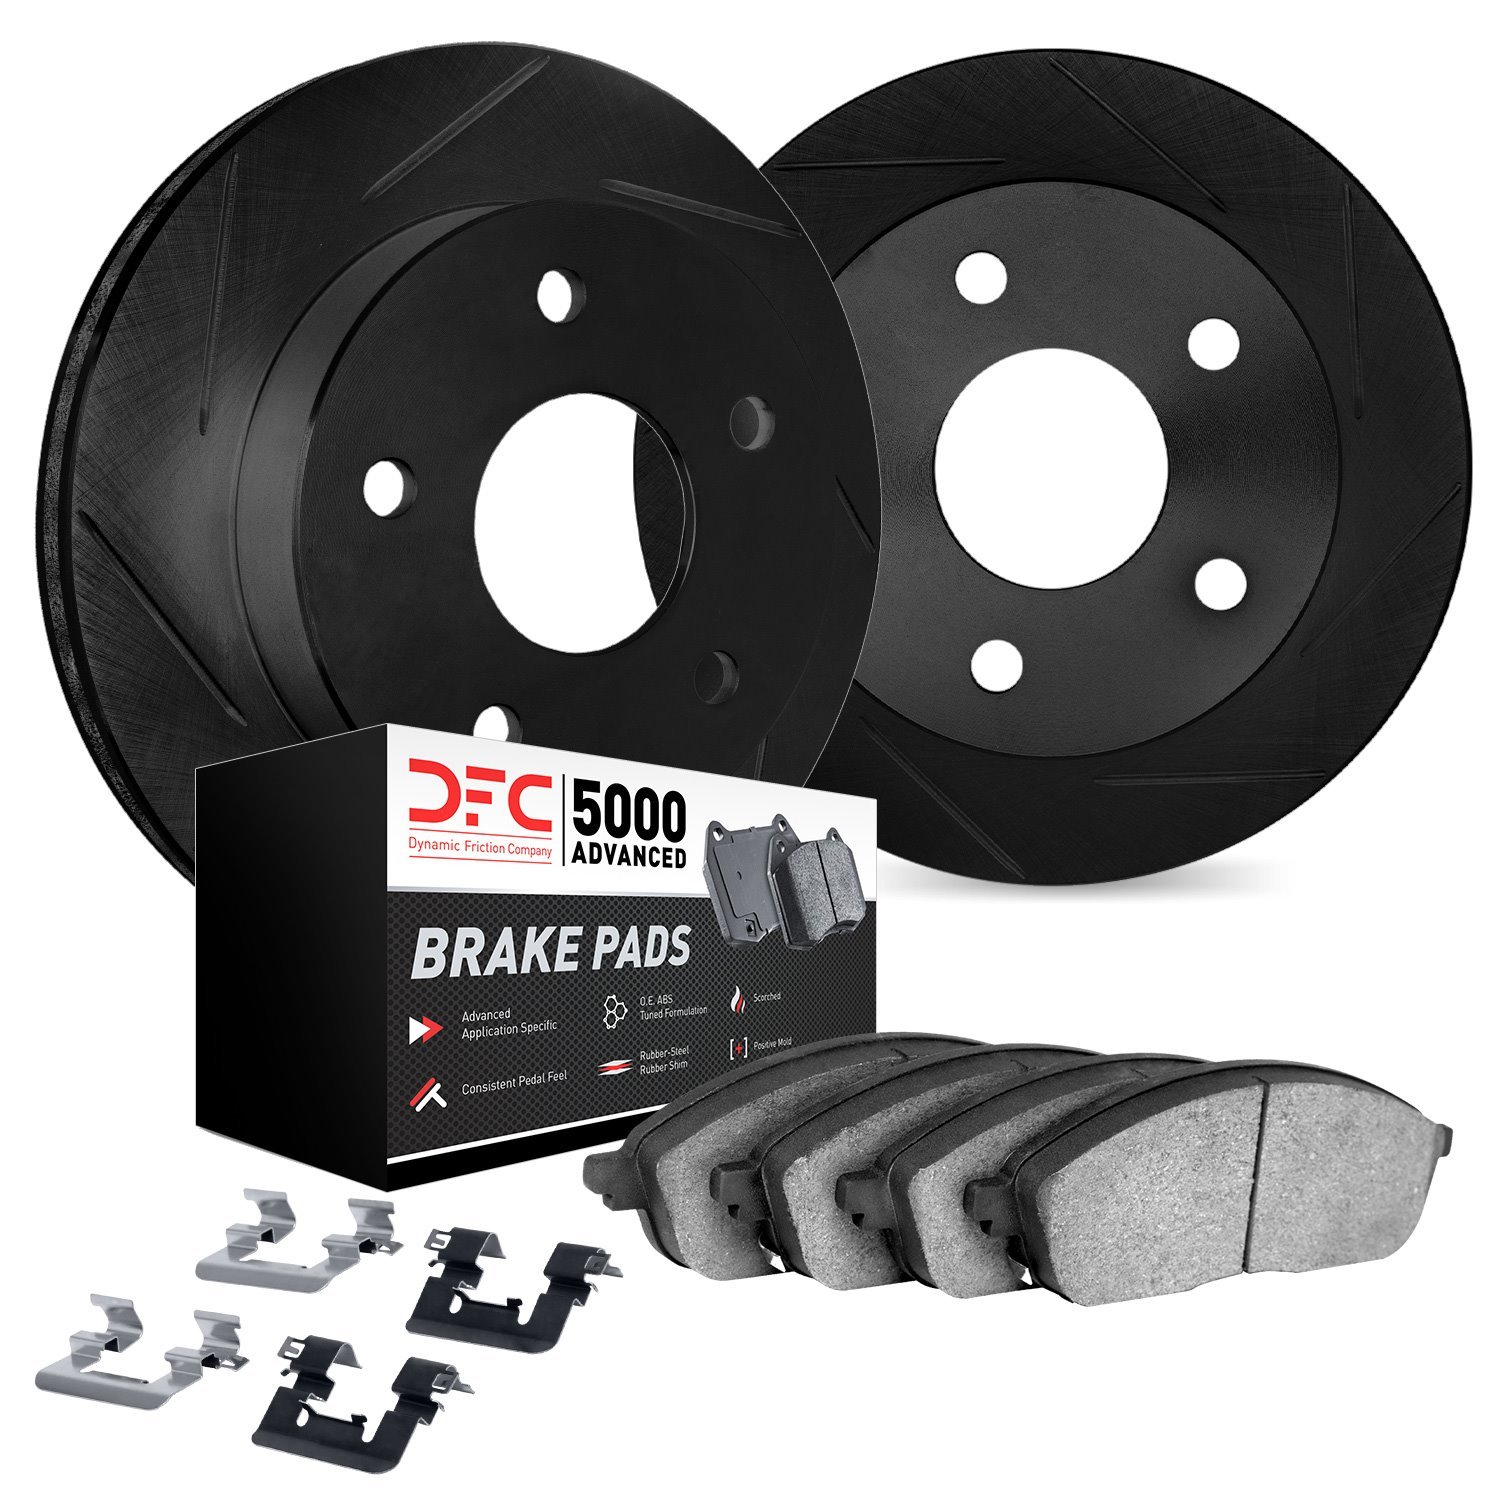 3512-80073 Slotted Brake Rotors w/5000 Advanced Brake Pads Kit & Hardware [Black], 2013-2015 Ford/Lincoln/Mercury/Mazda, Positio